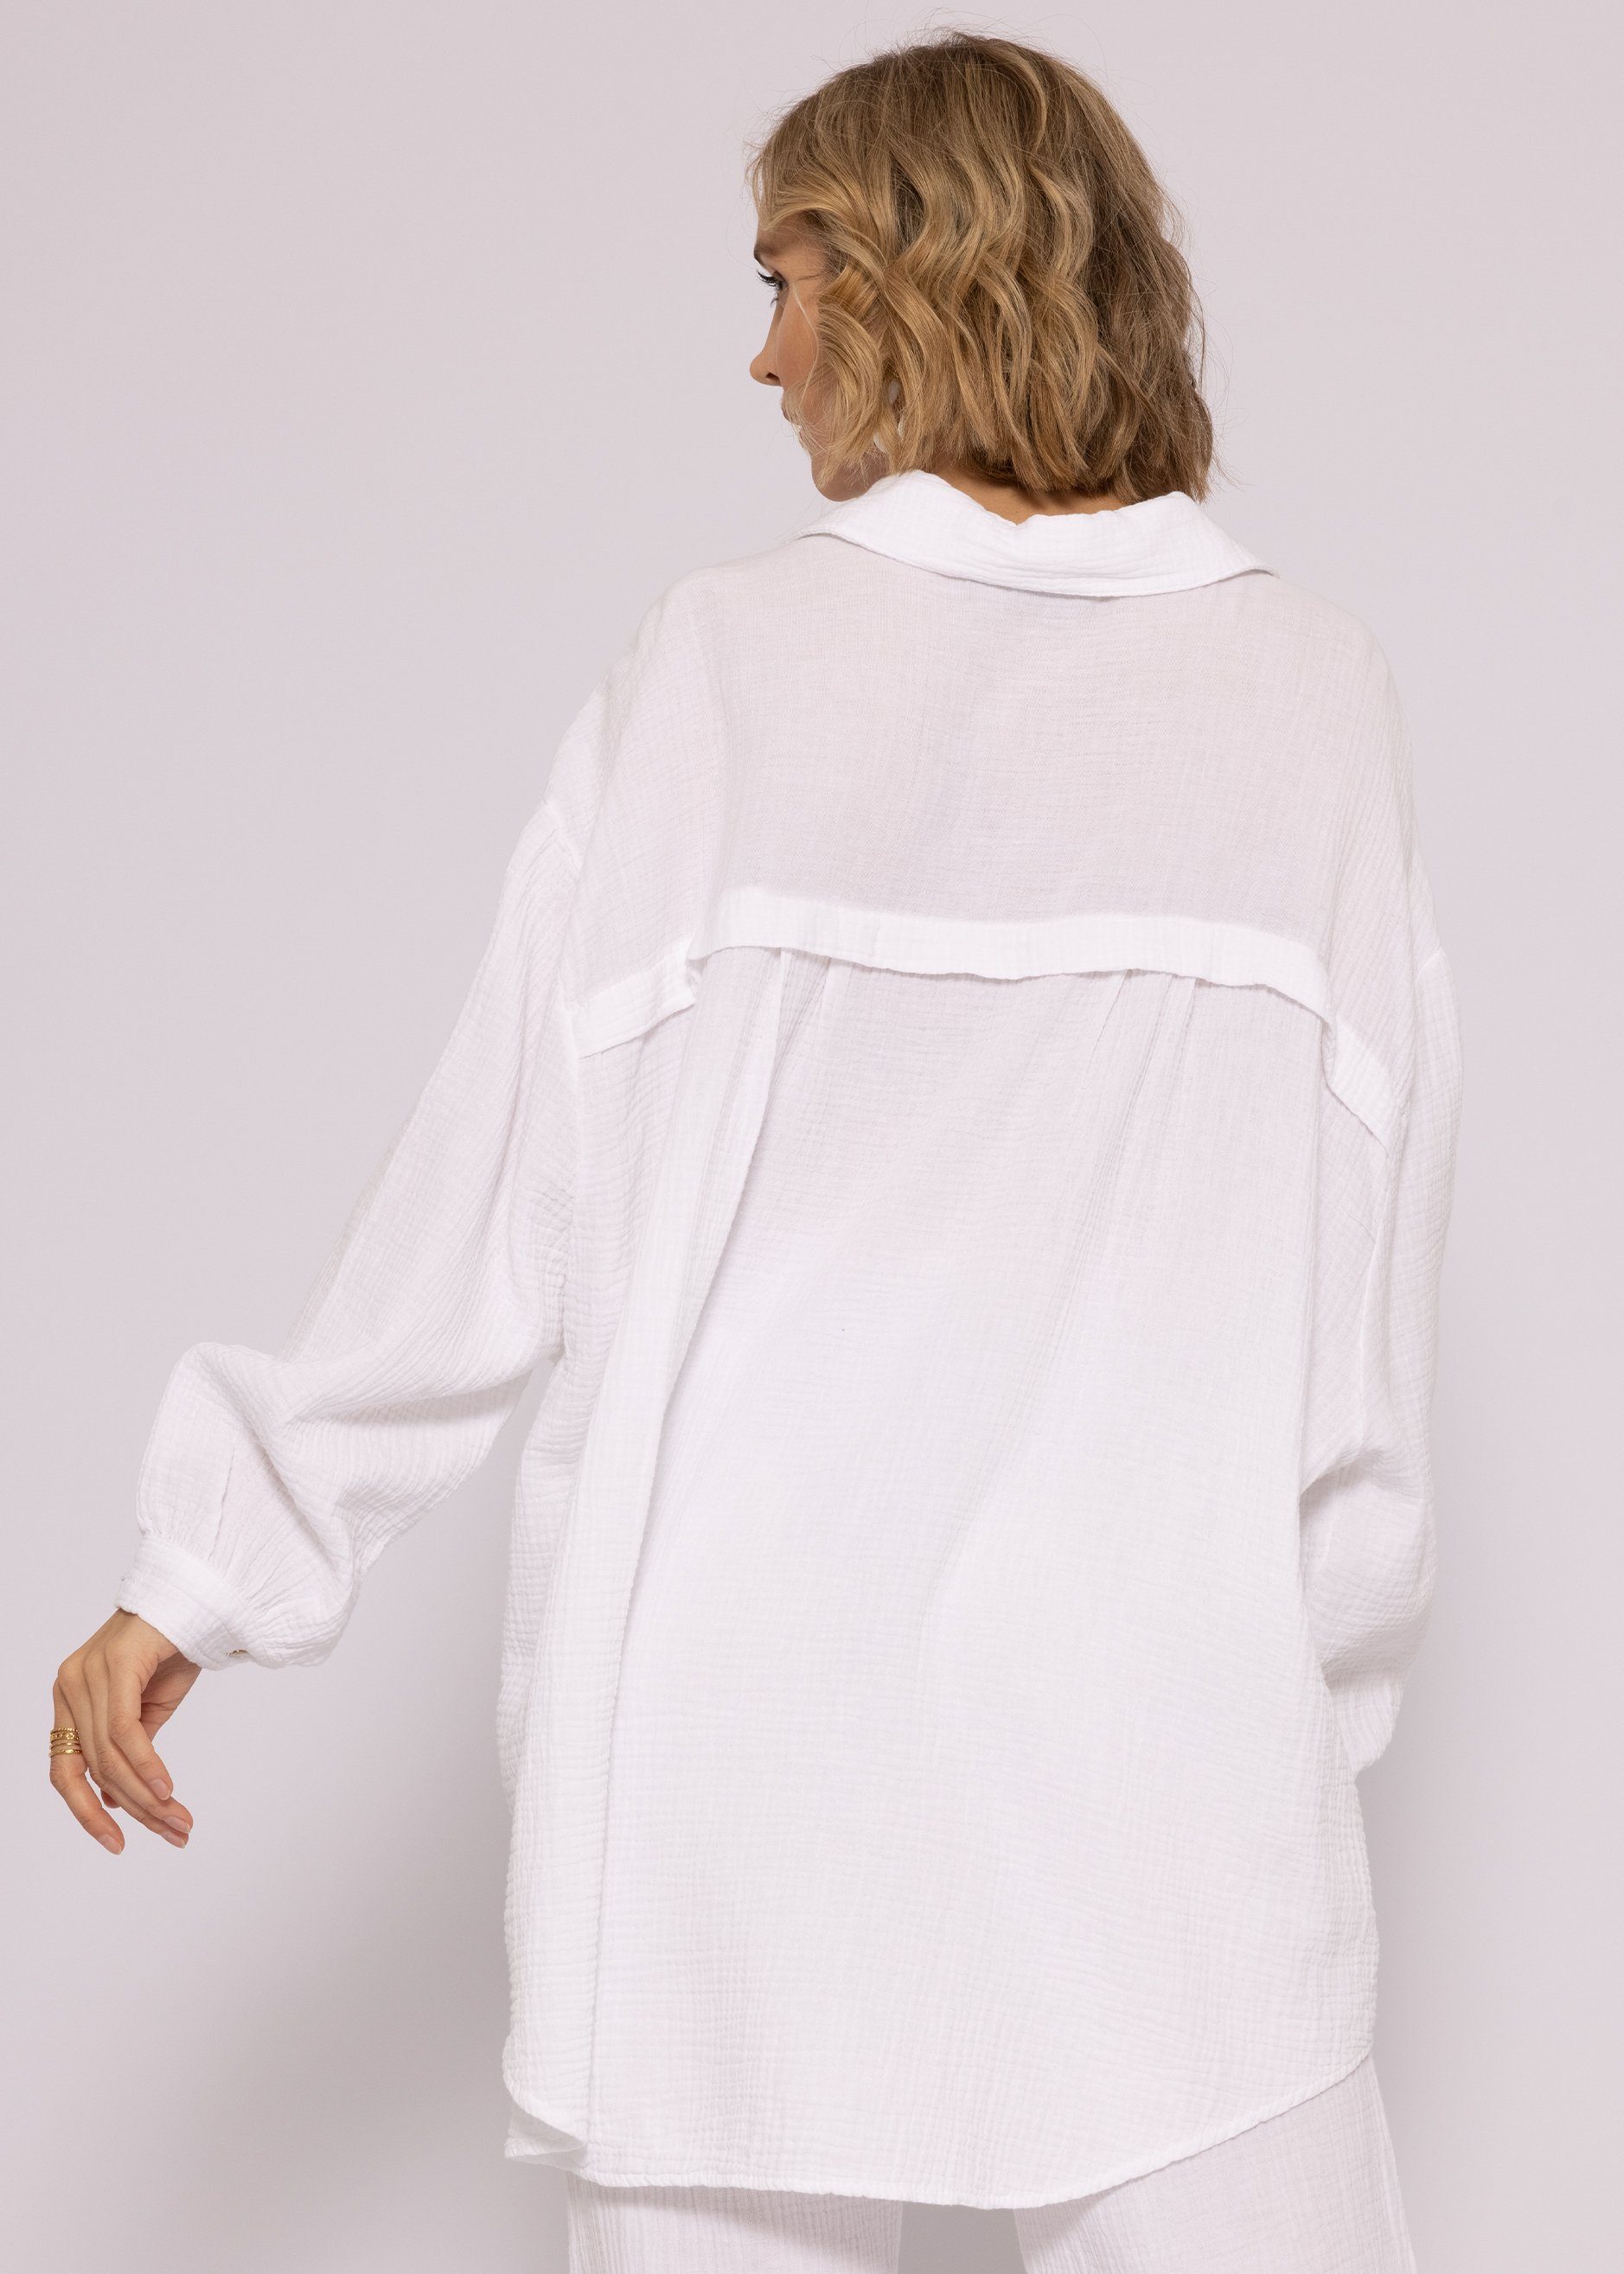 Hemdbluse Weiß mit Damen V-Ausschnitt Oversize Langarm aus Baumwolle Bluse lang SASSYCLASSY Longbluse Musselin